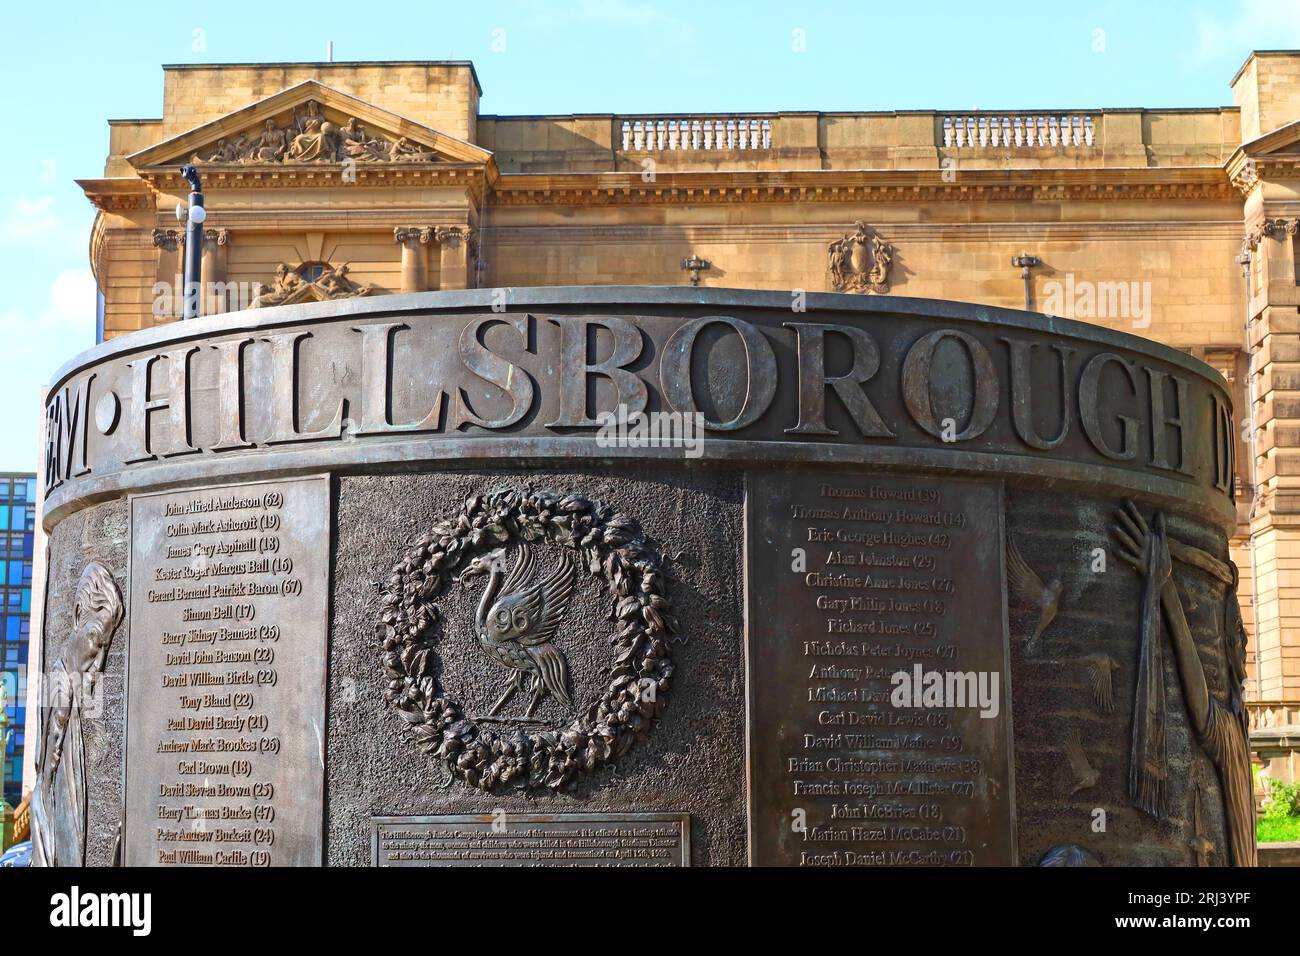 Hillsborough Memorial Monument, to the 96, Tom Murphy, St John's Gardens, Old Haymarket, Liverpool, Merseyside, England, UK, L1 6ER Stockfoto